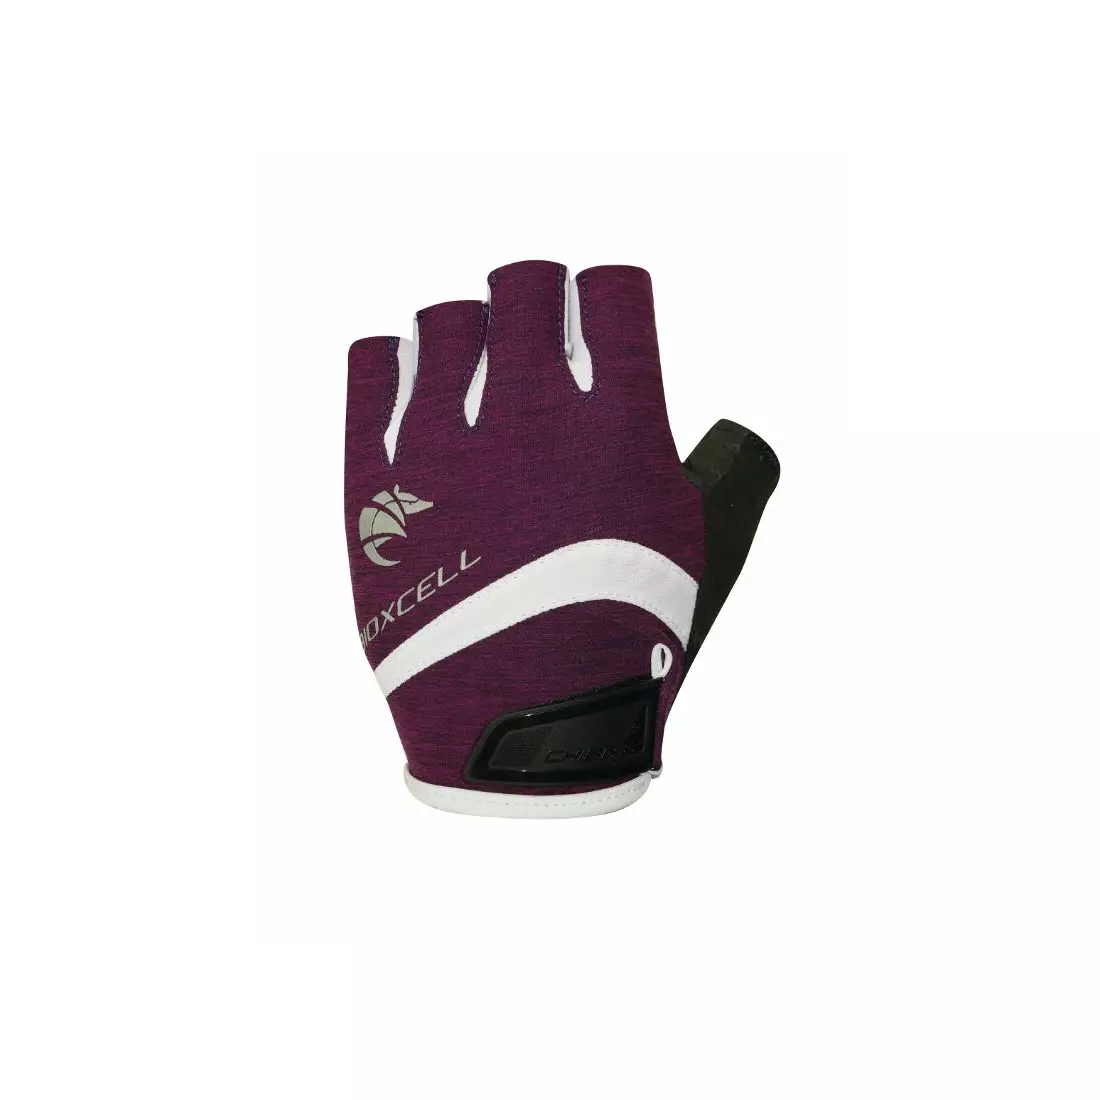 CHIBA LADY BIOXCELL PRO women's cycling gloves purple 3060919